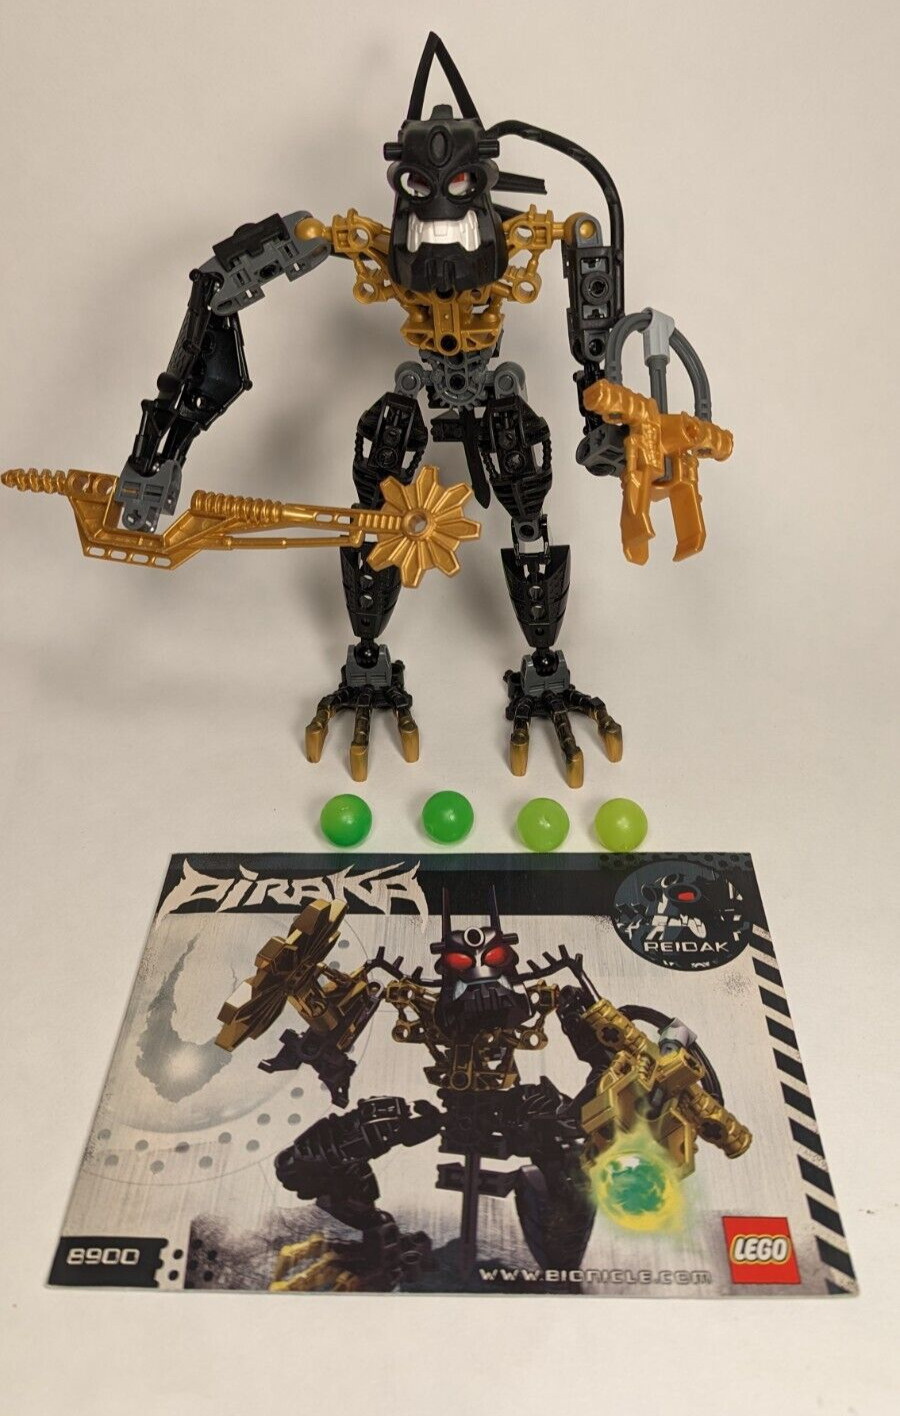 LEGO Bionicle Voya Nui Piraka 8900: Reidak (complete with Zamor Spheres)